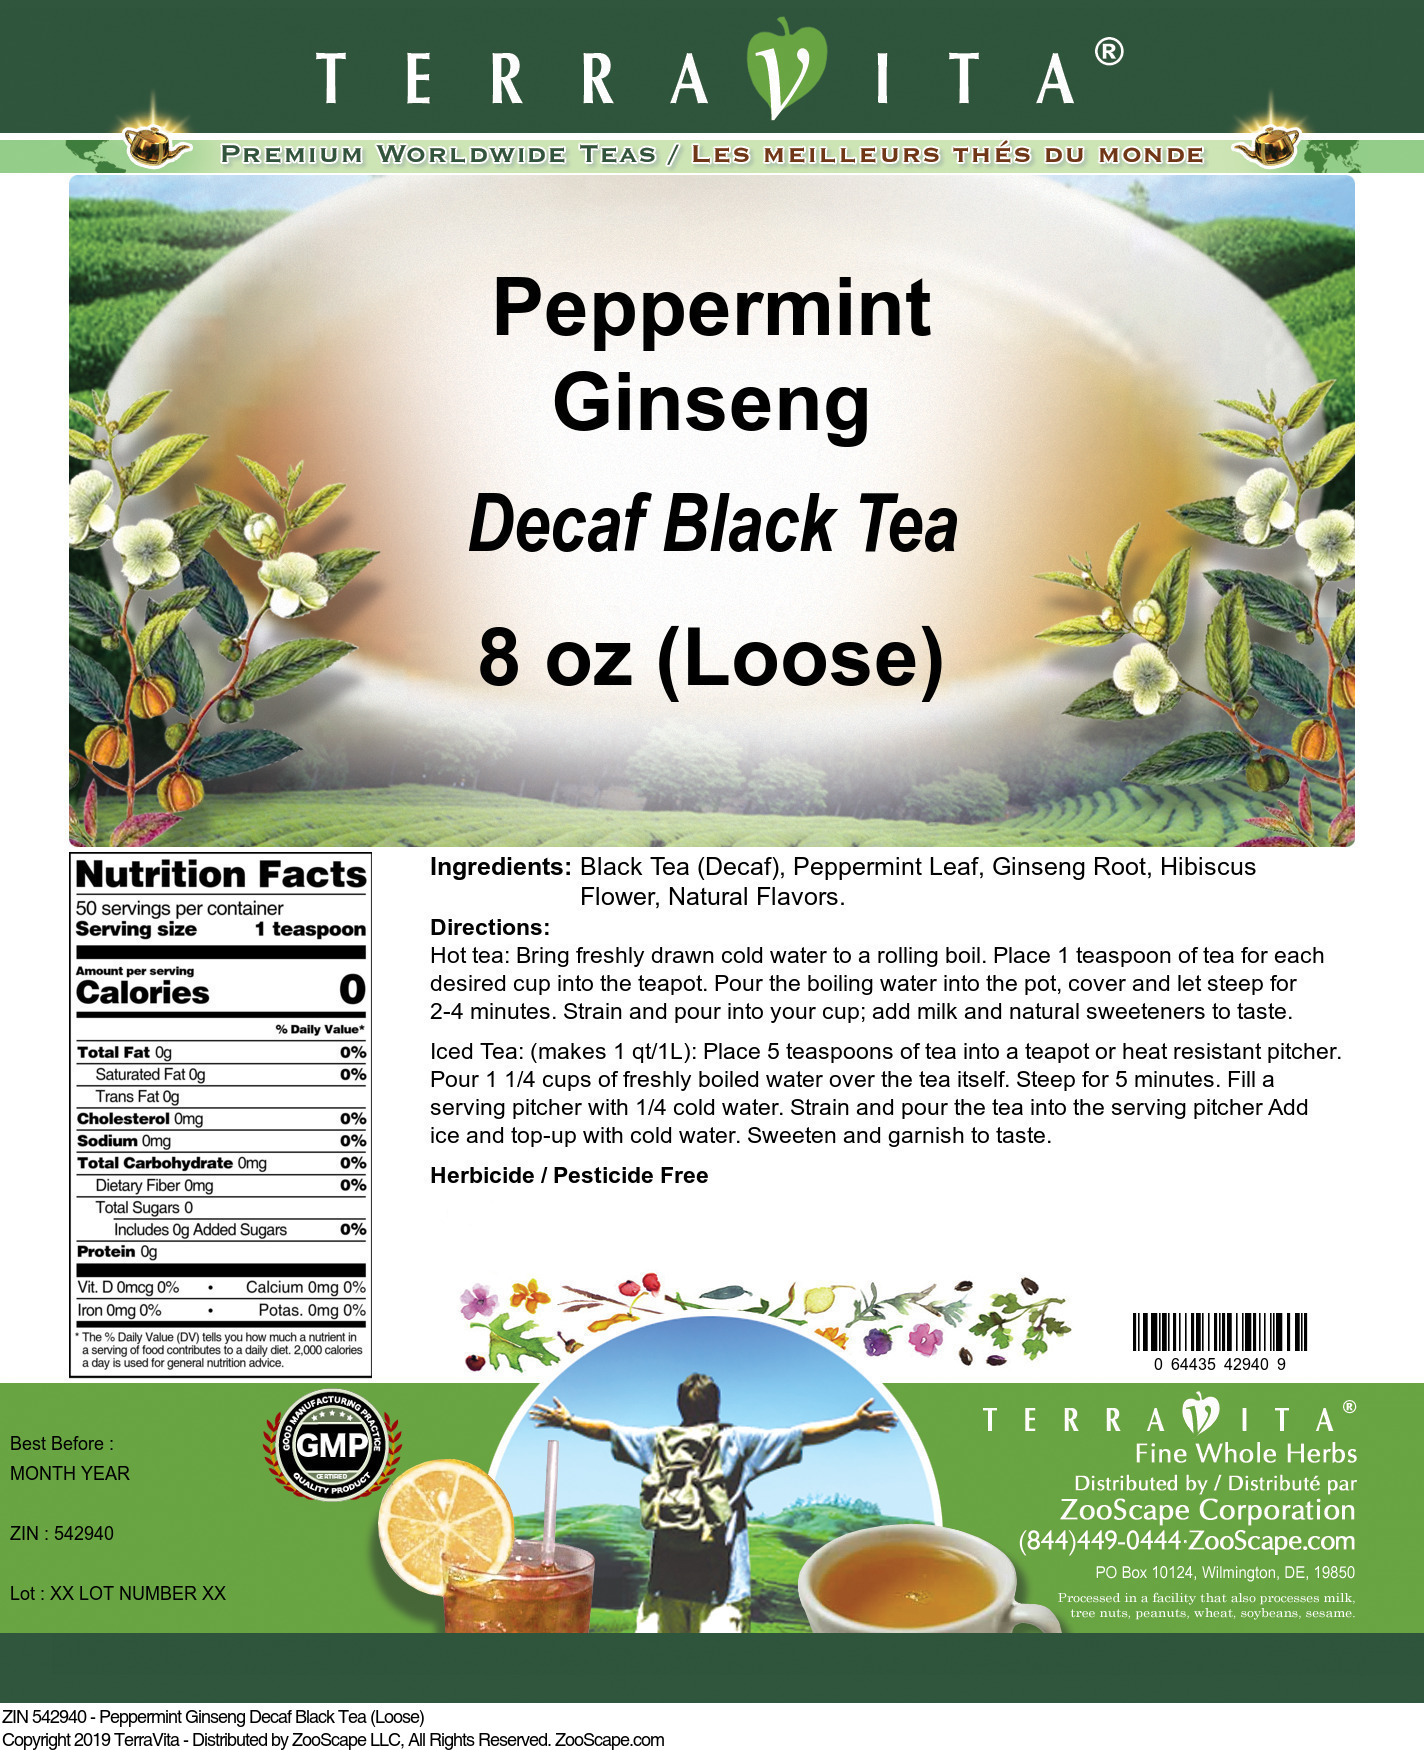 Peppermint Ginseng Decaf Black Tea (Loose) - Label